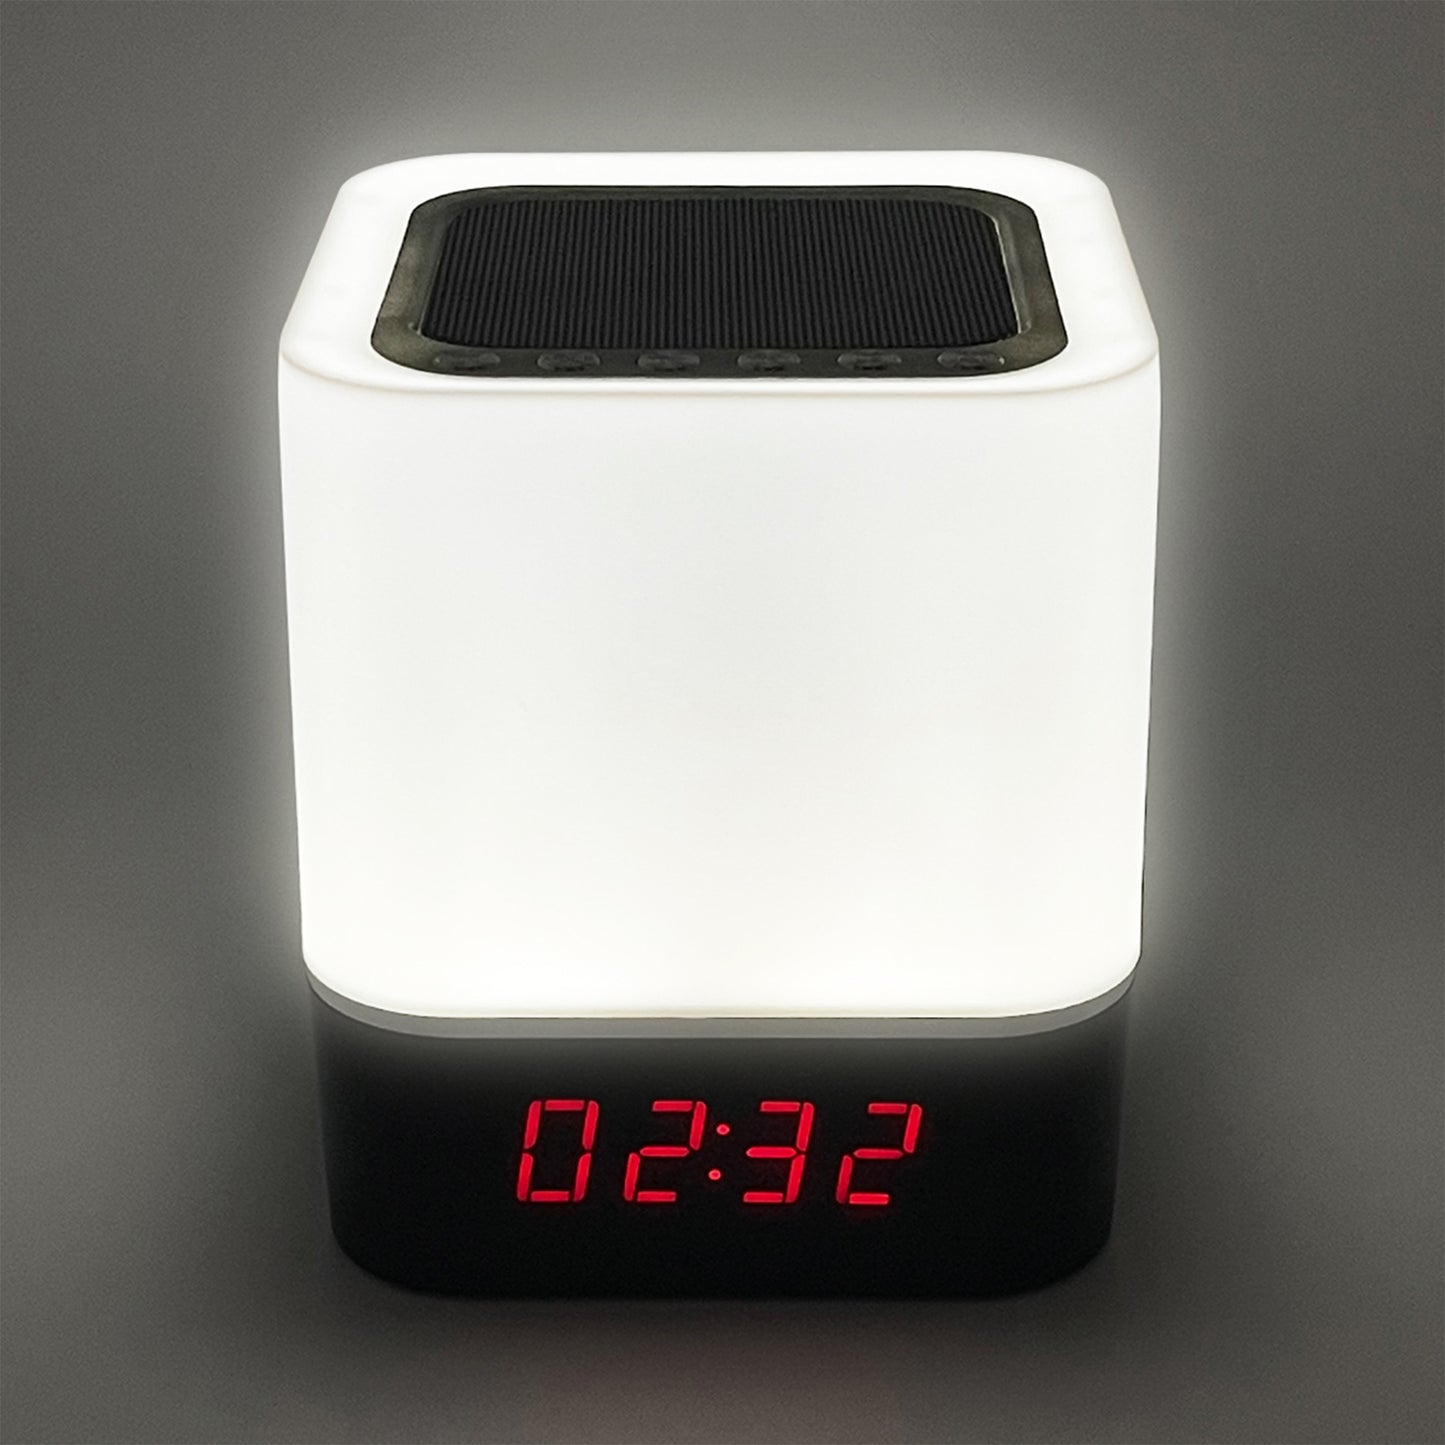 Zunammy Color Changing Wireless Alarm Clock Speaker